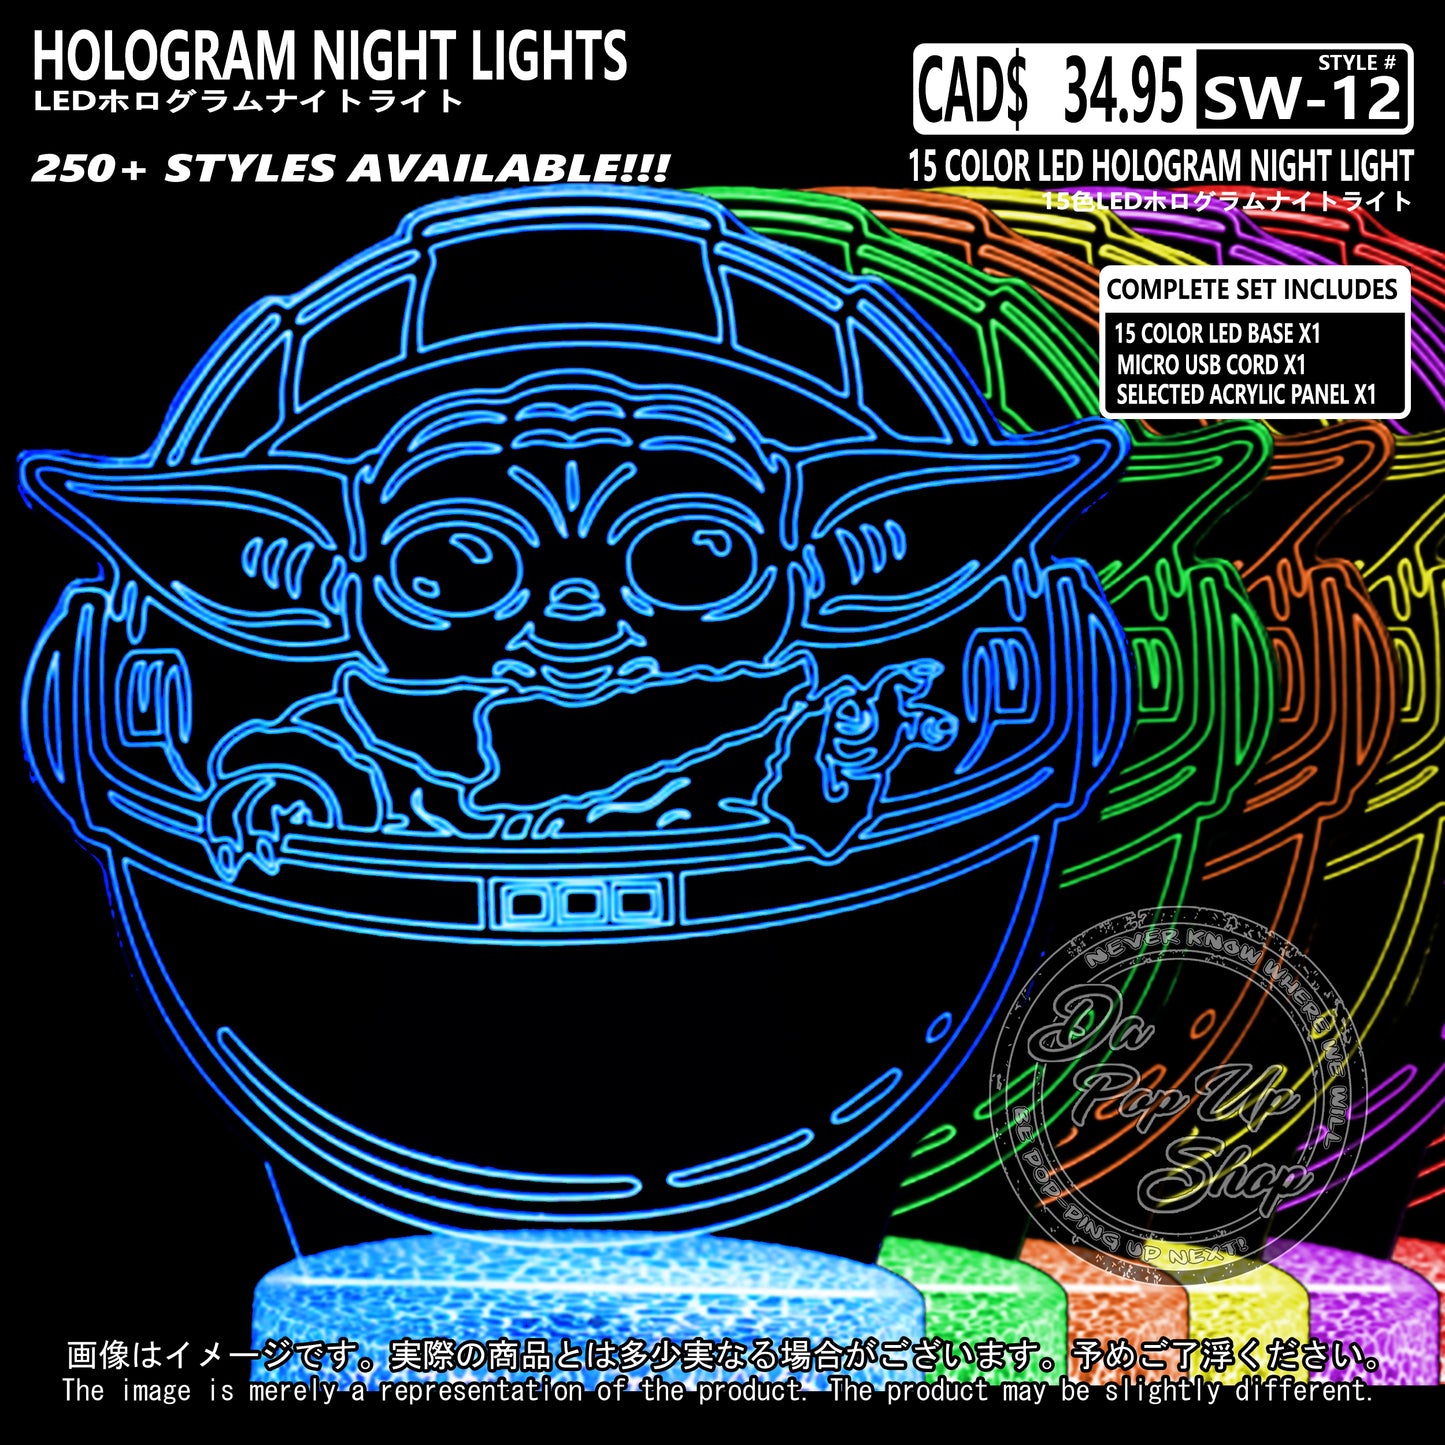 (SW-12) GROGU Star Wars Hologram LED Night Light